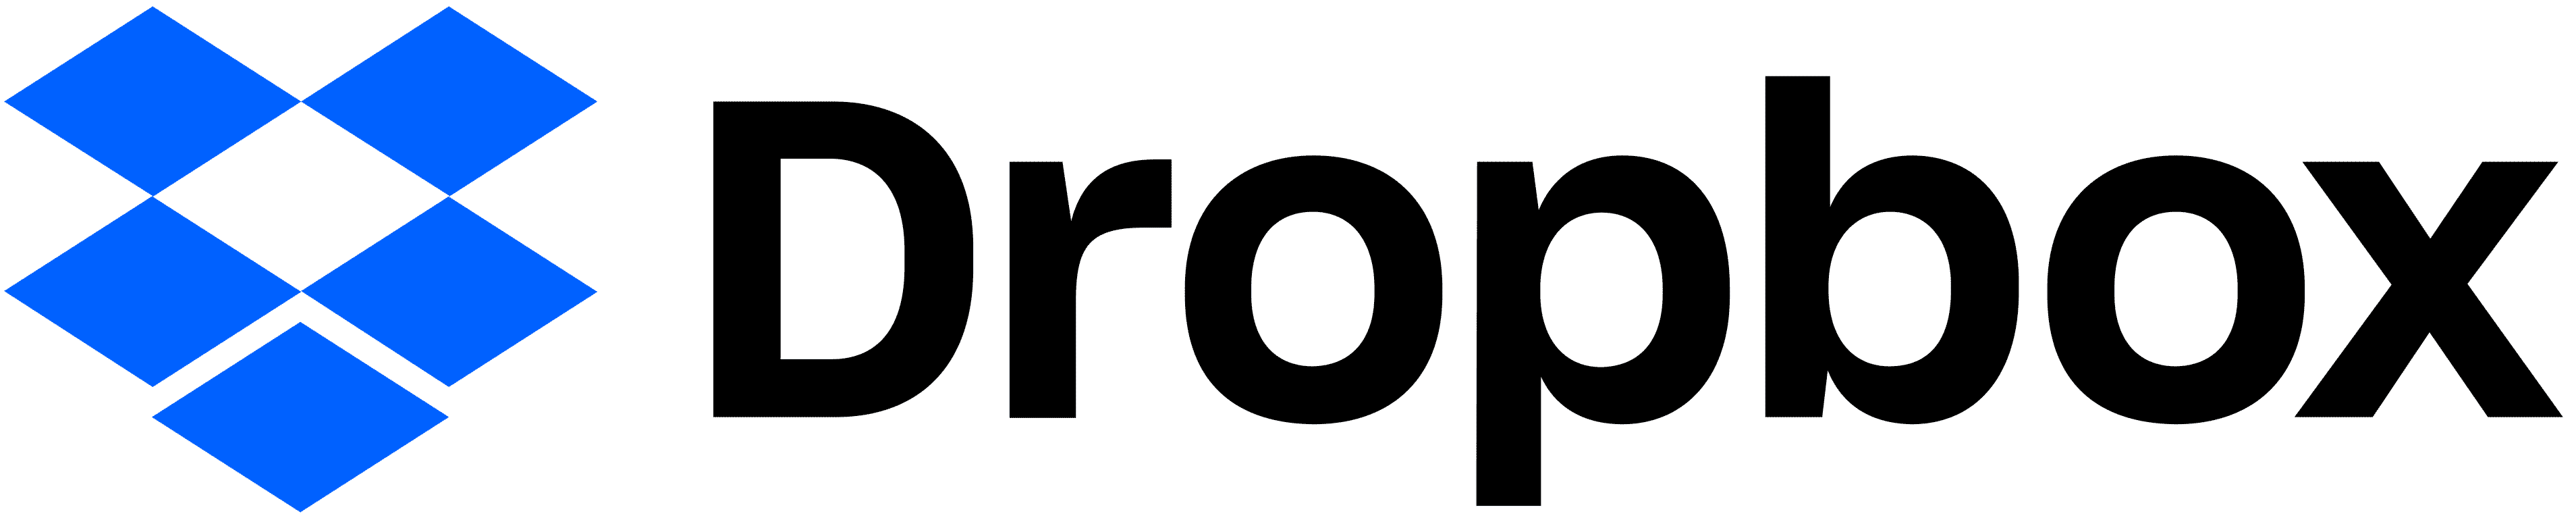 Operations-Dropbox-Logo